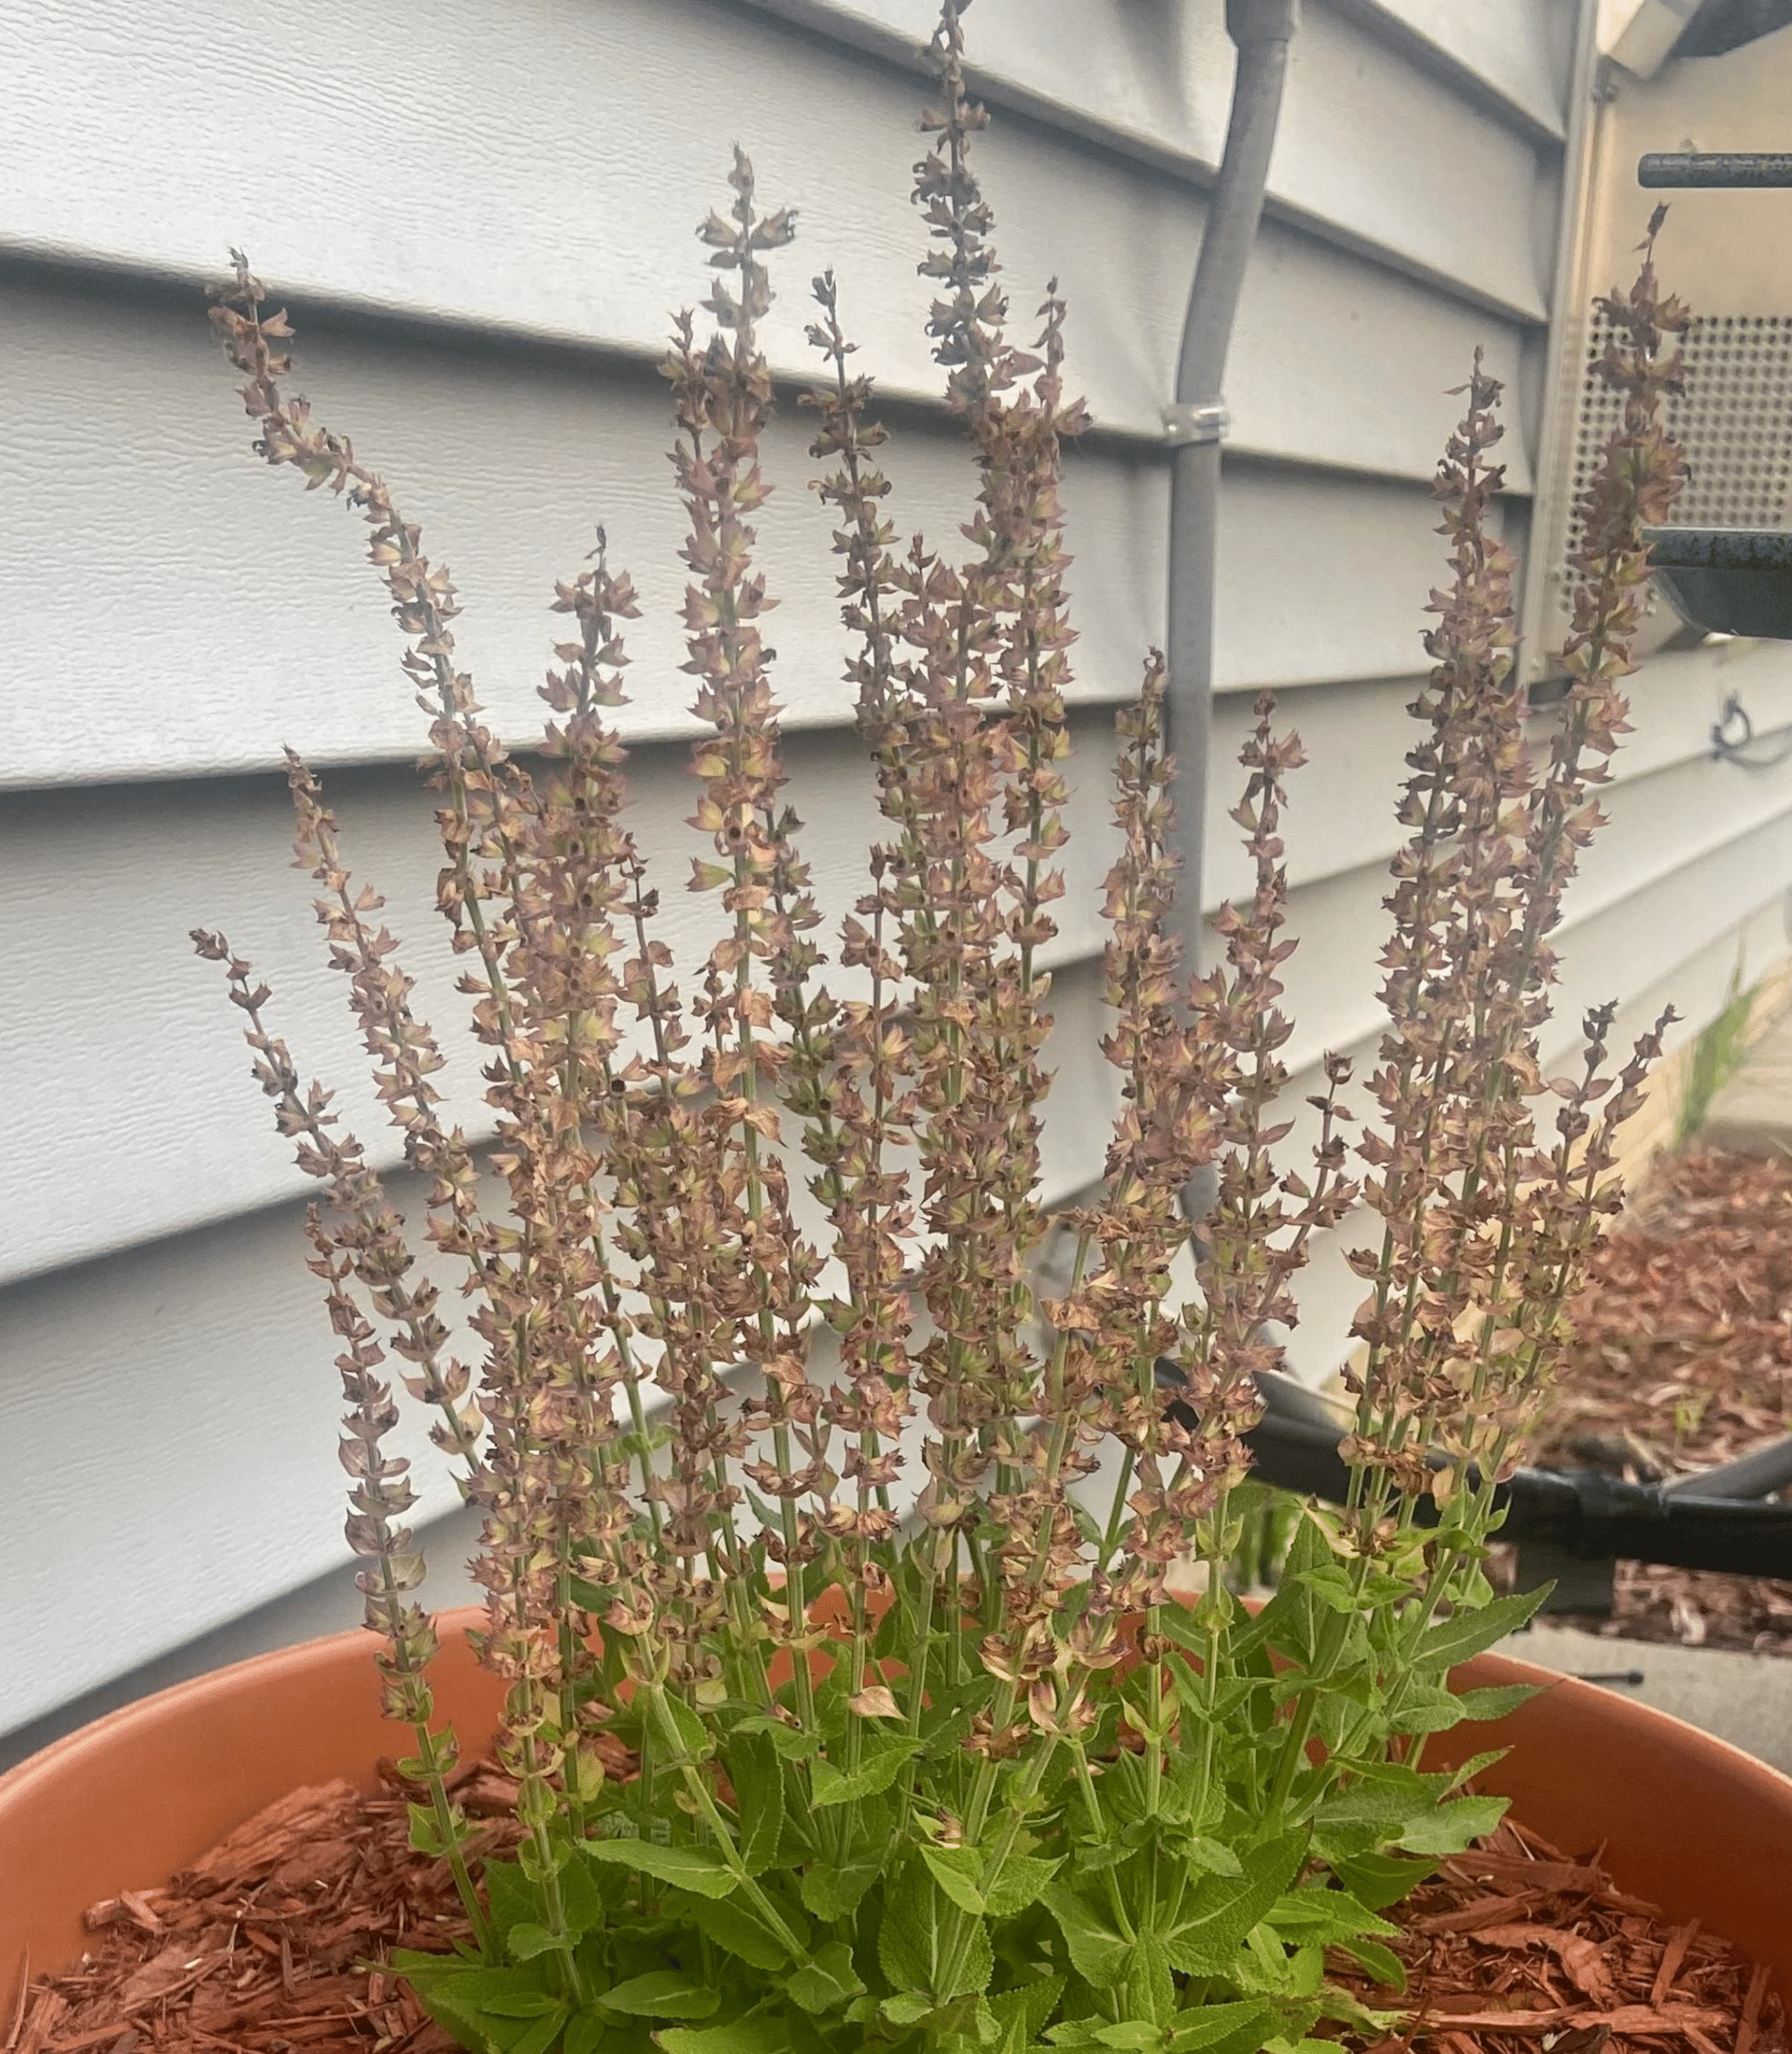 Salvia flowers turning brown